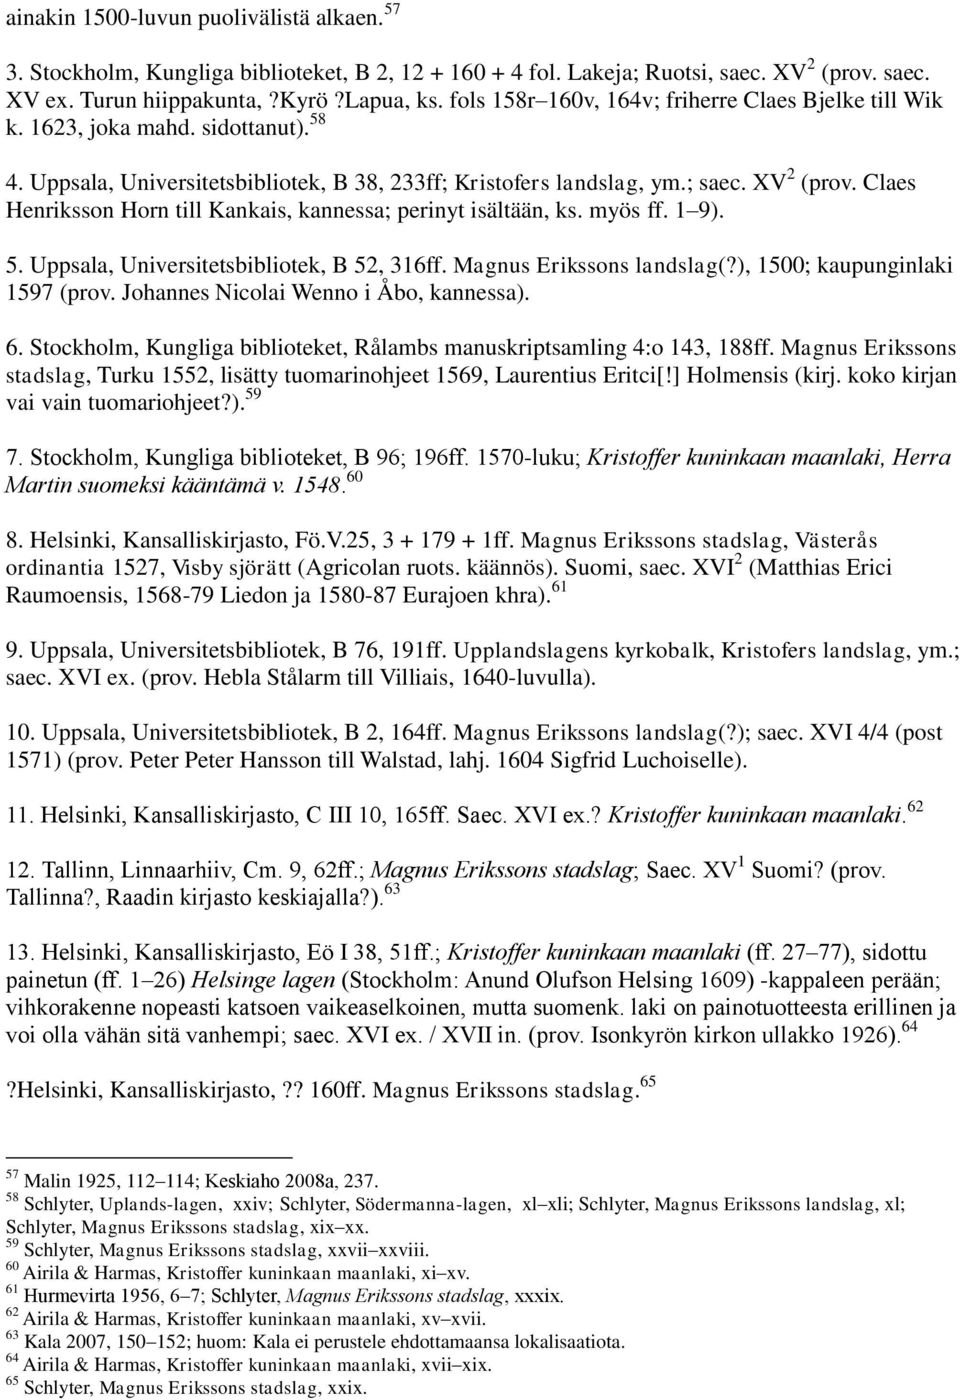 Claes Henriksson Horn till Kankais, kannessa; perinyt isältään, ks. myös ff. 1 9). 5. Uppsala, Universitetsbibliotek, B 52, 316ff. Magnus Erikssons landslag(?), 1500; kaupunginlaki 1597 (prov.